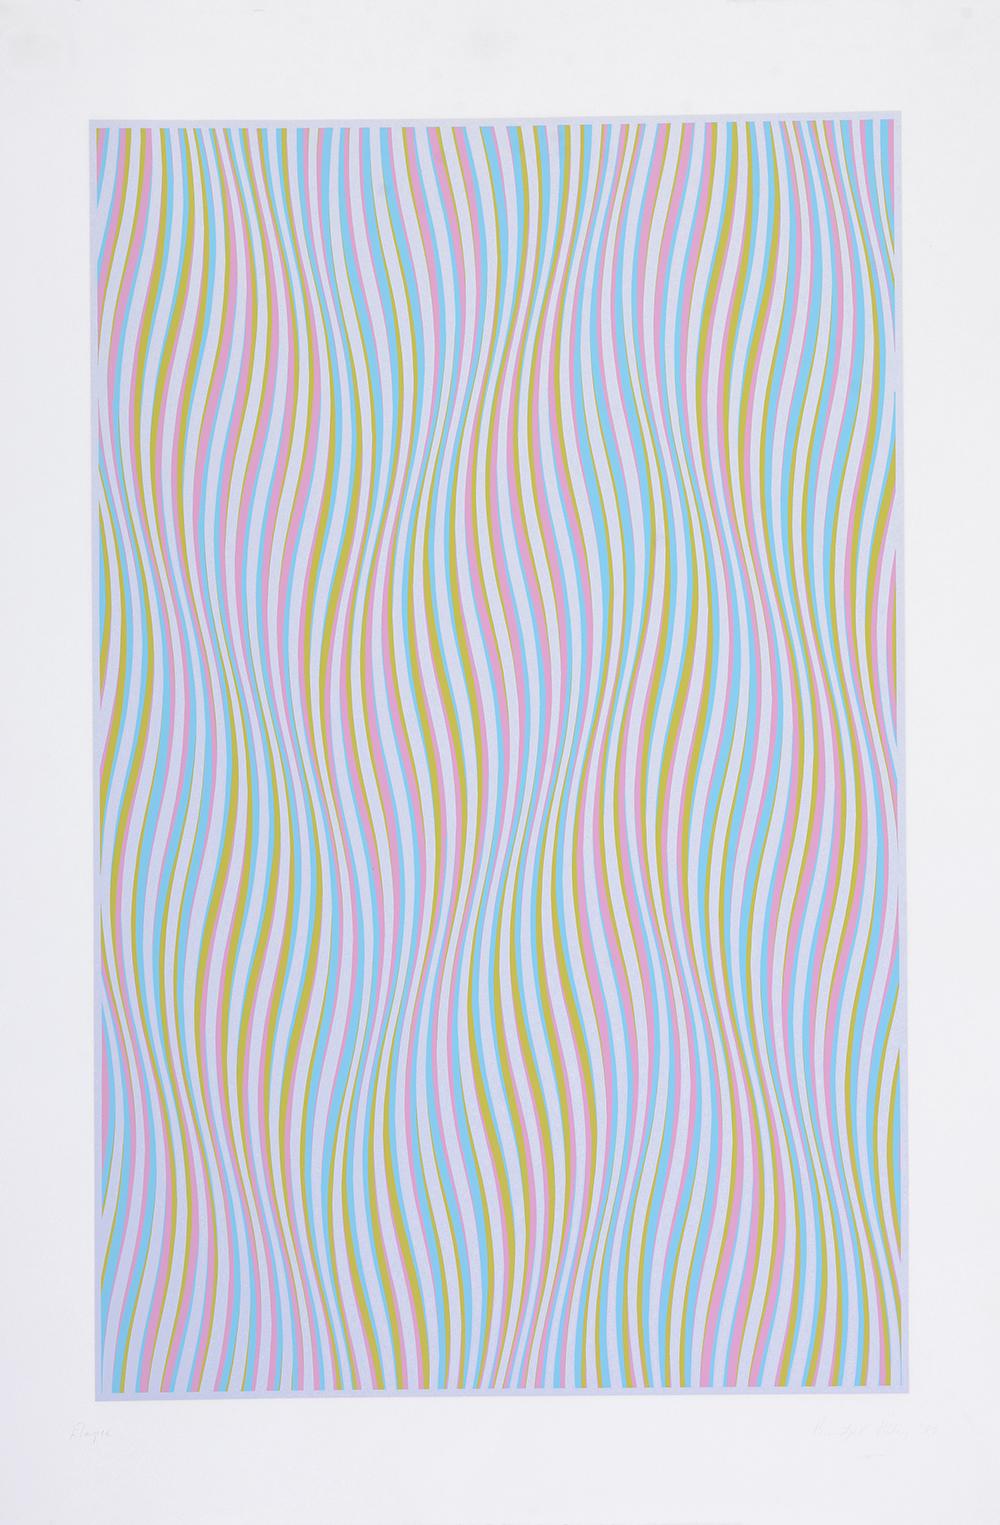 Bridget Riley Abstract Print - Elapse